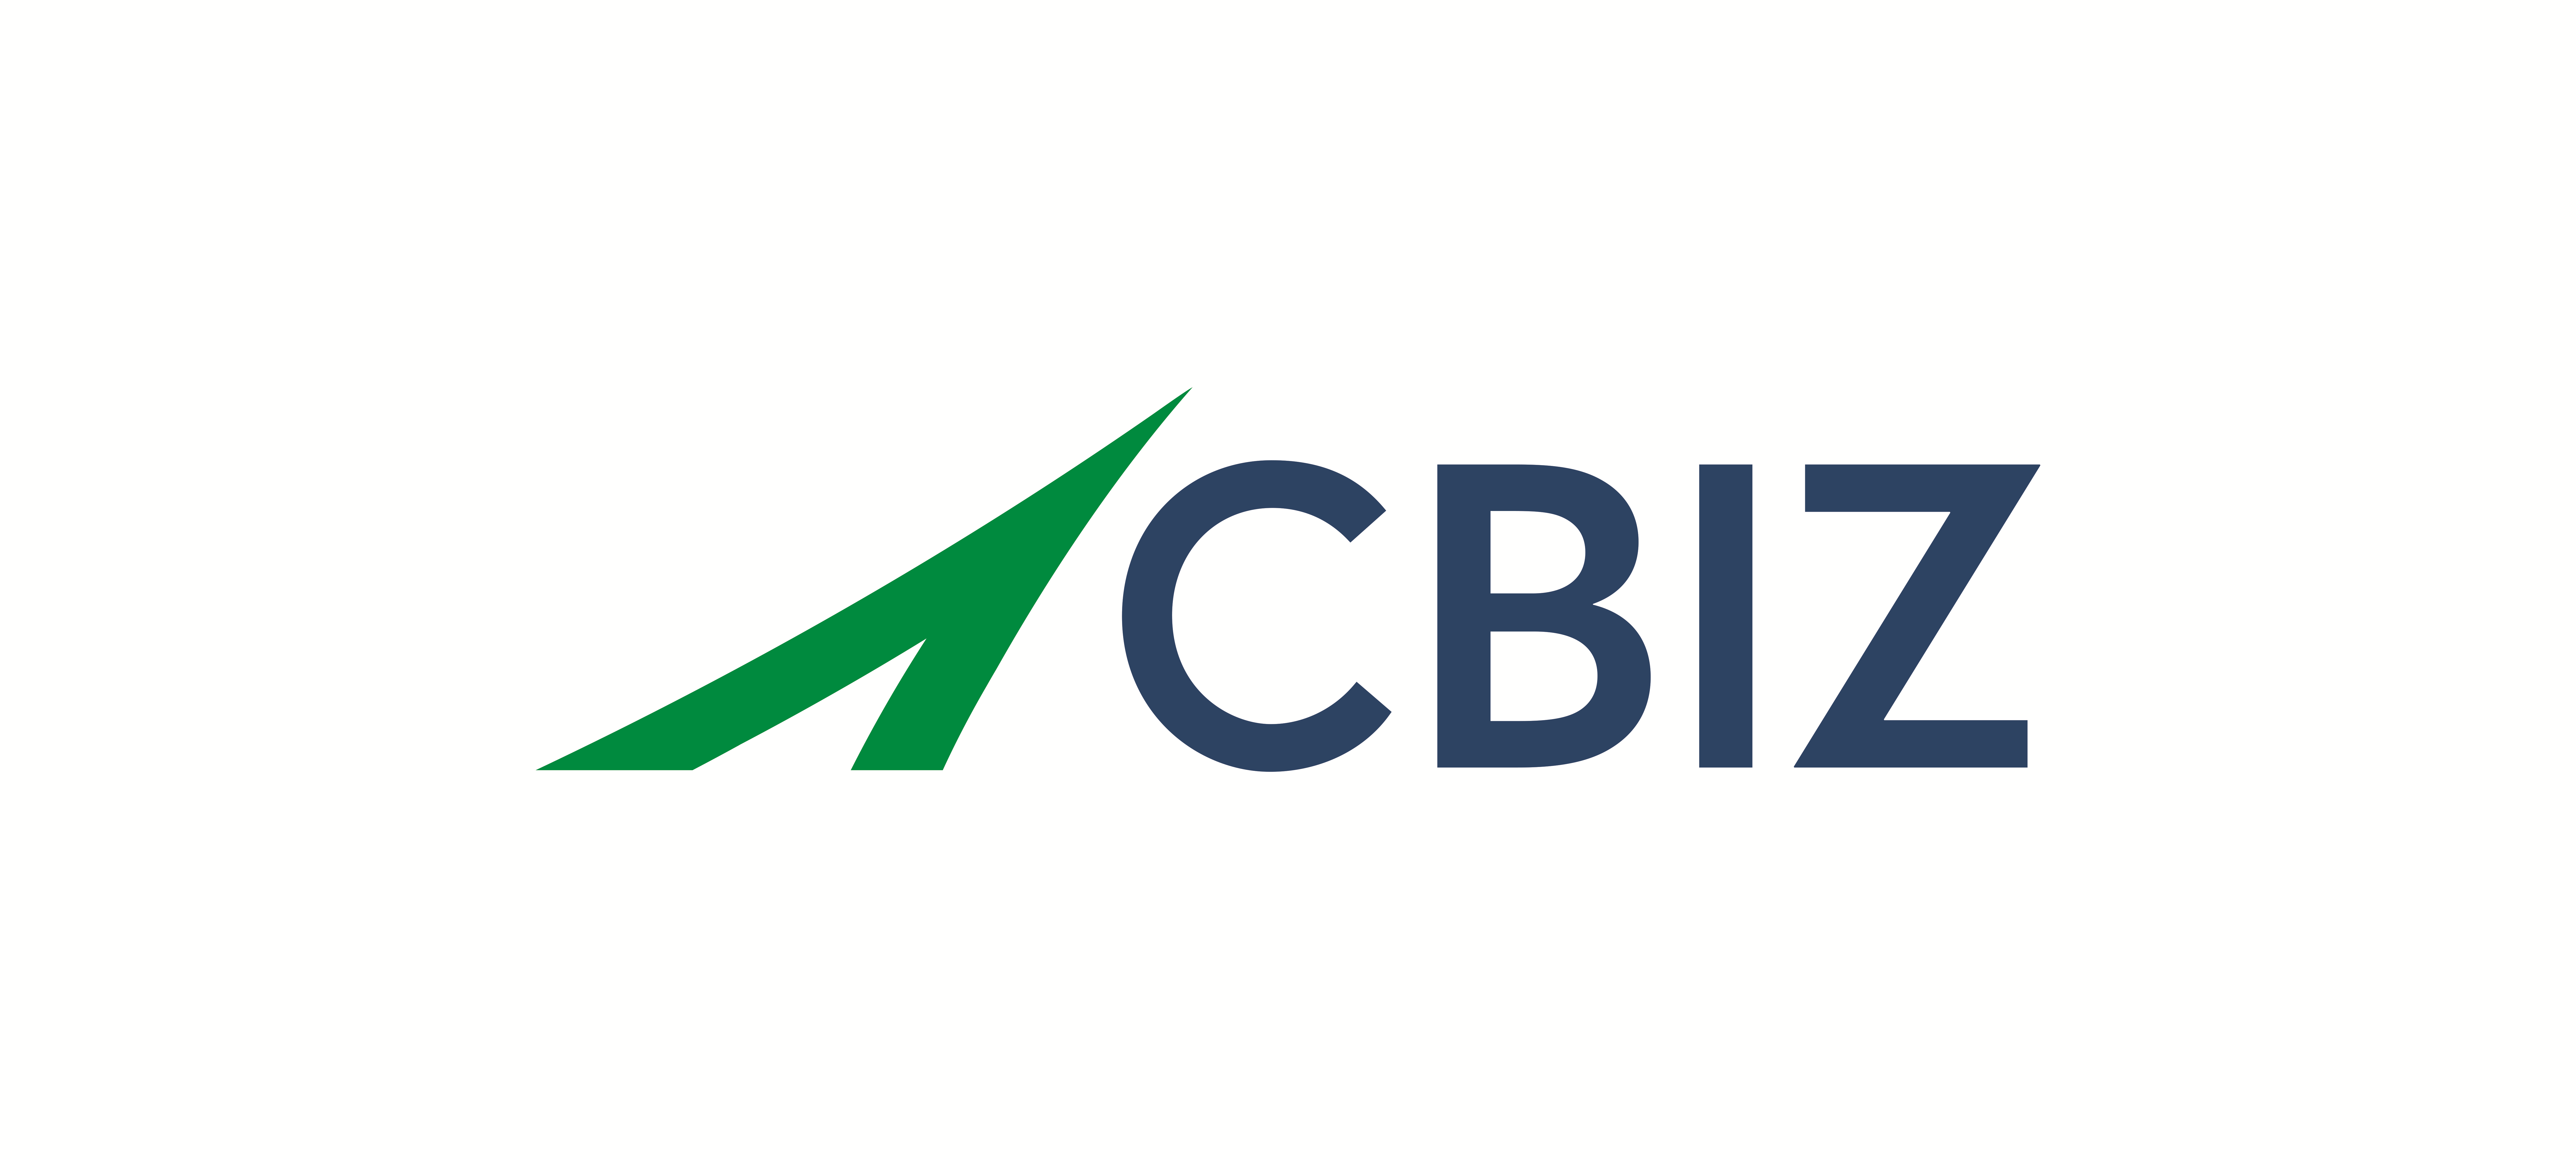 CBIZ Company Logo